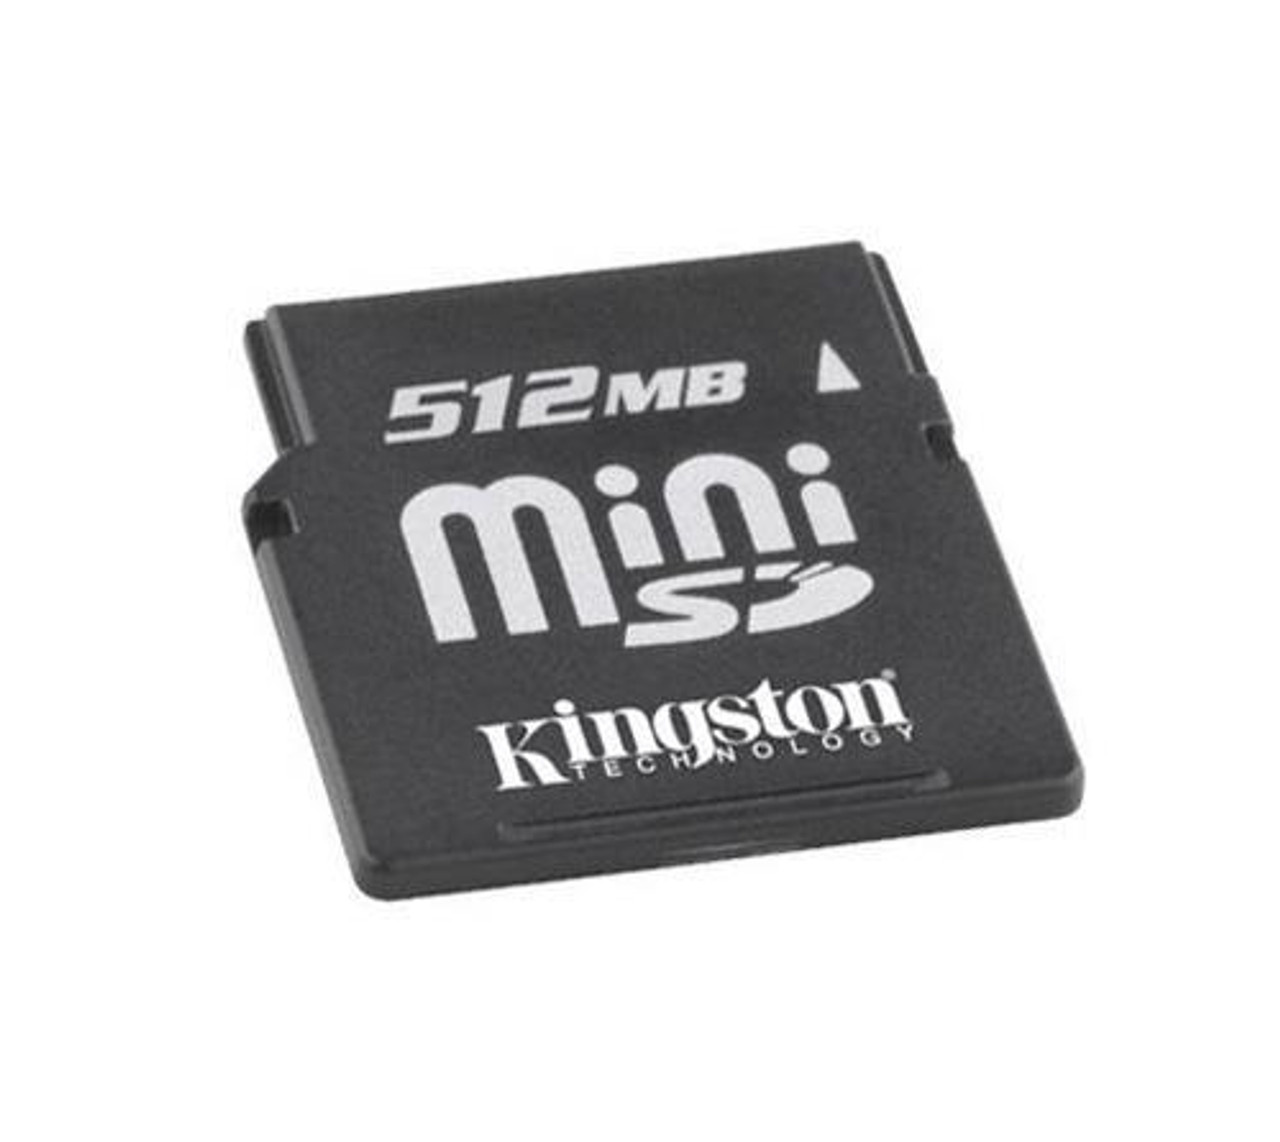 Kingston 512MB SD Data Card